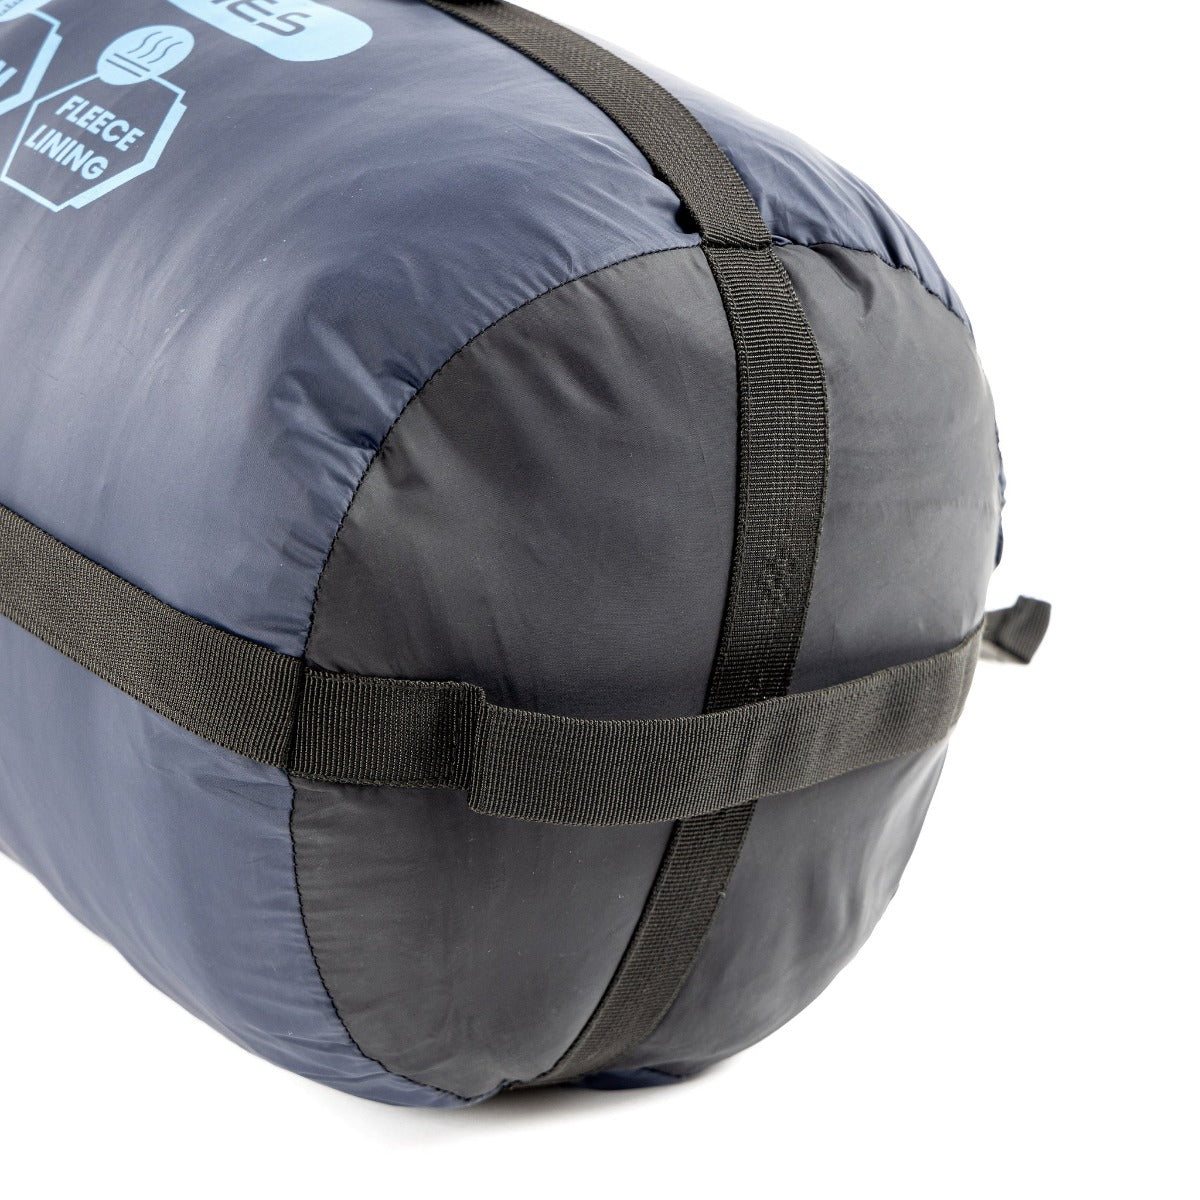 Zanskar Series -5°C Army Sleeping Bag with Fleece Inner 8